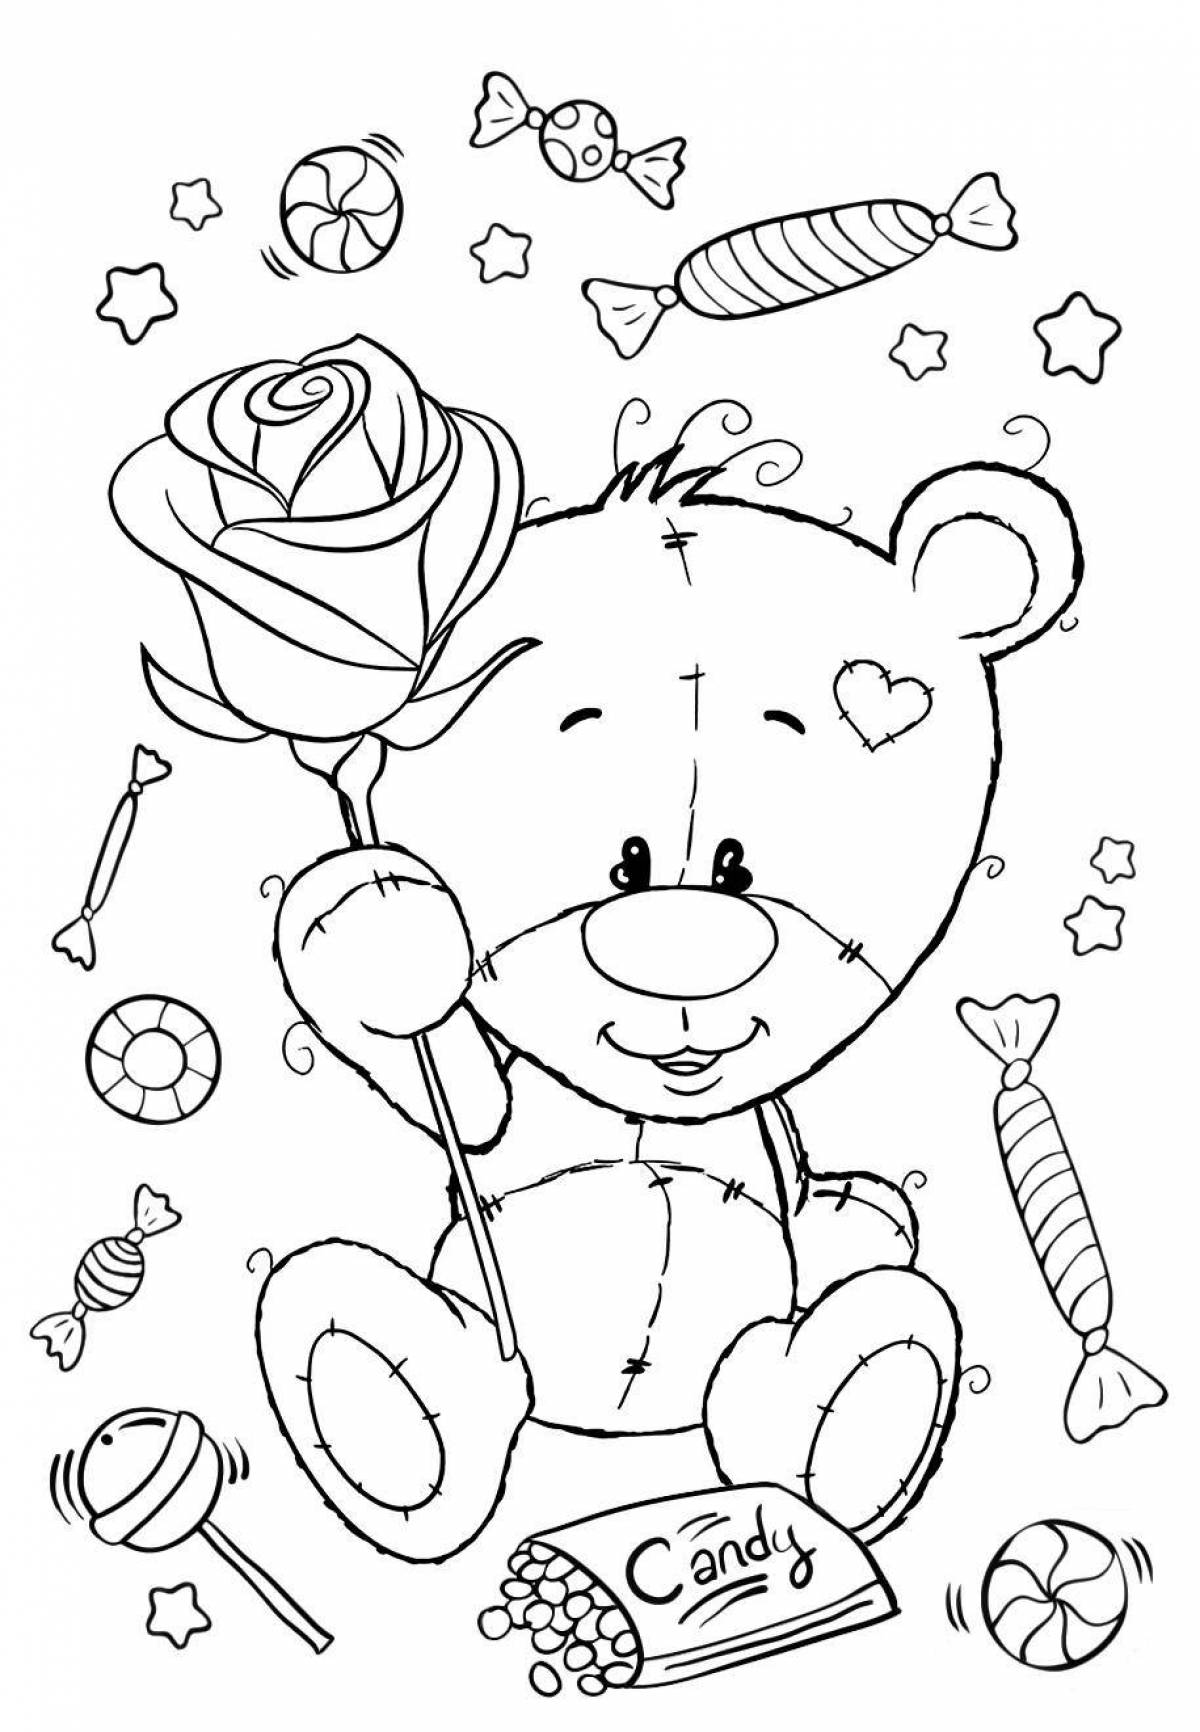 Adorable teddy bear coloring book for girls